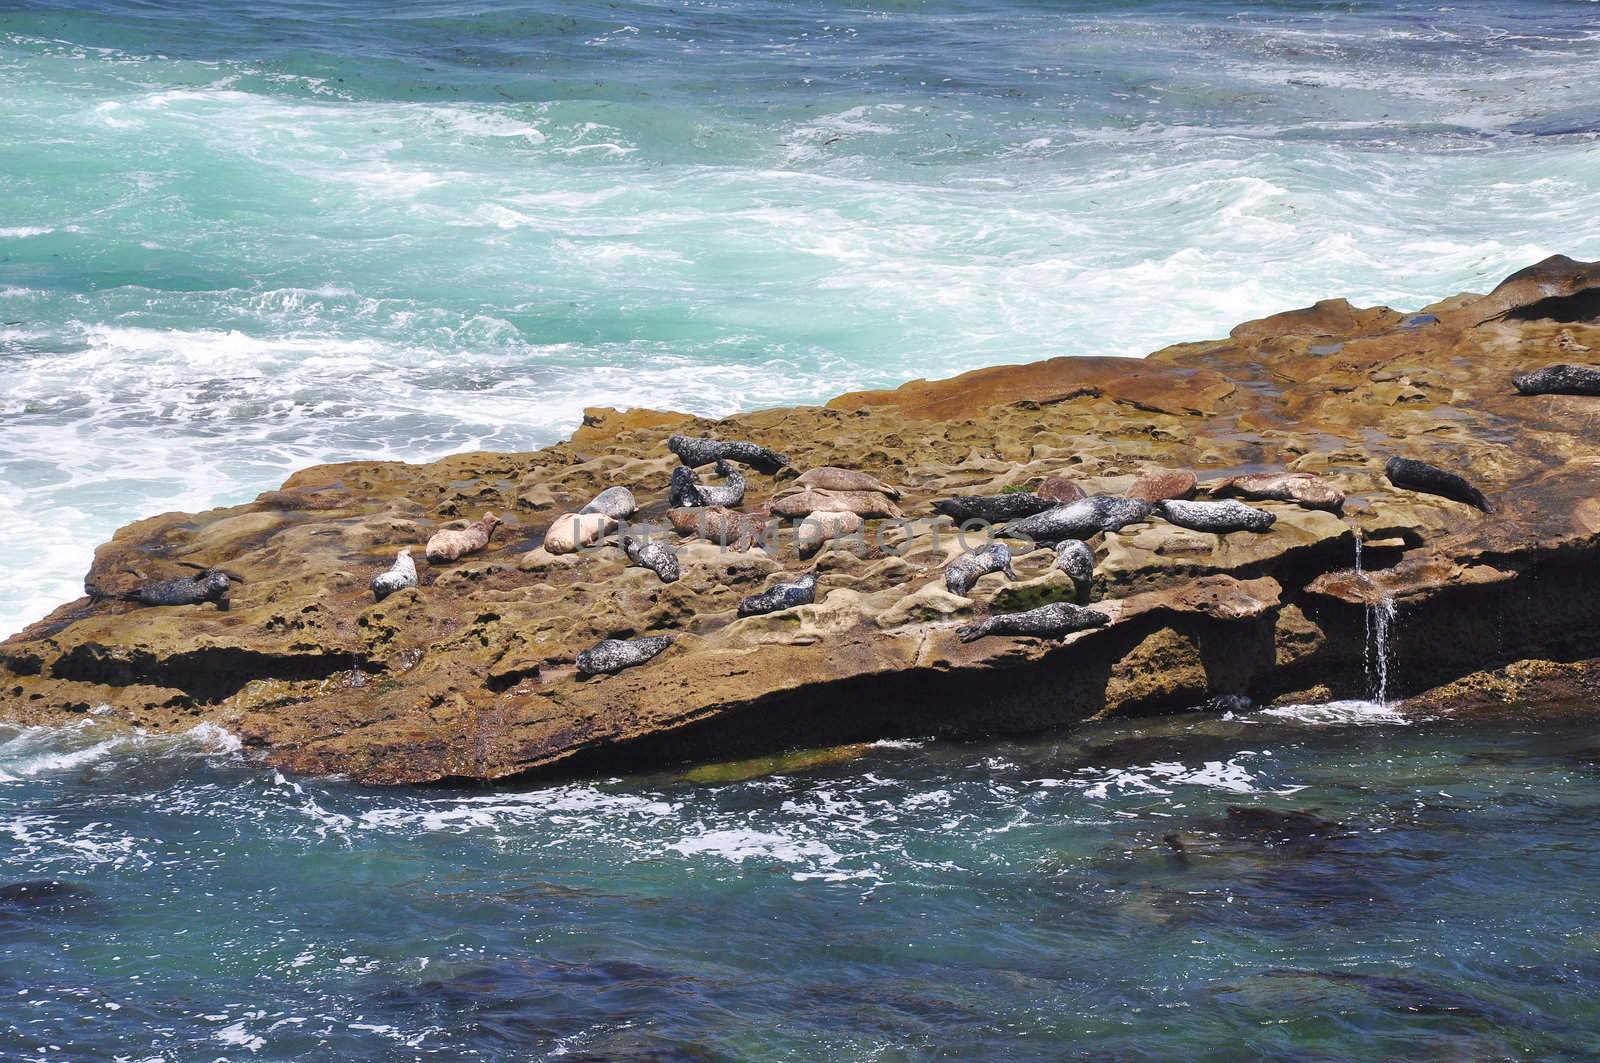 Seals on rocky ledge by PJ1960